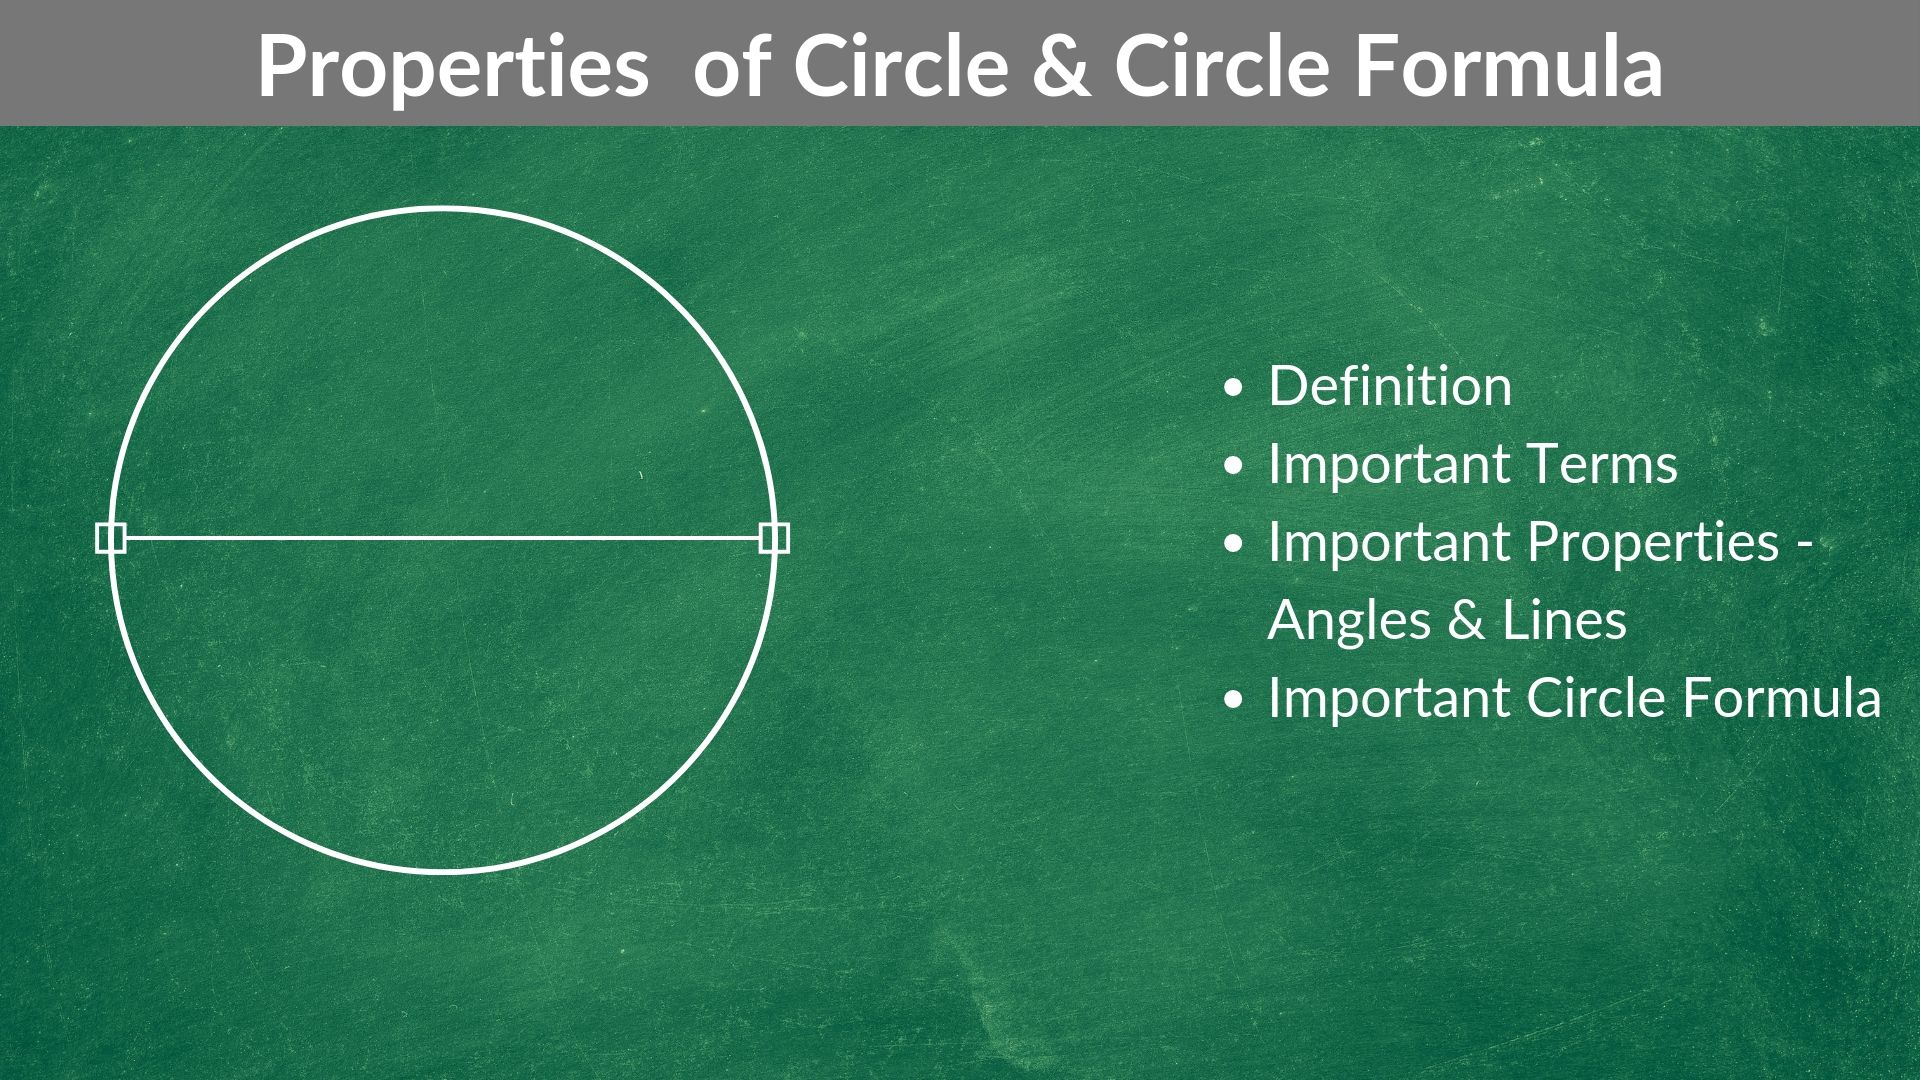 Properties of Circle & Circle Formula